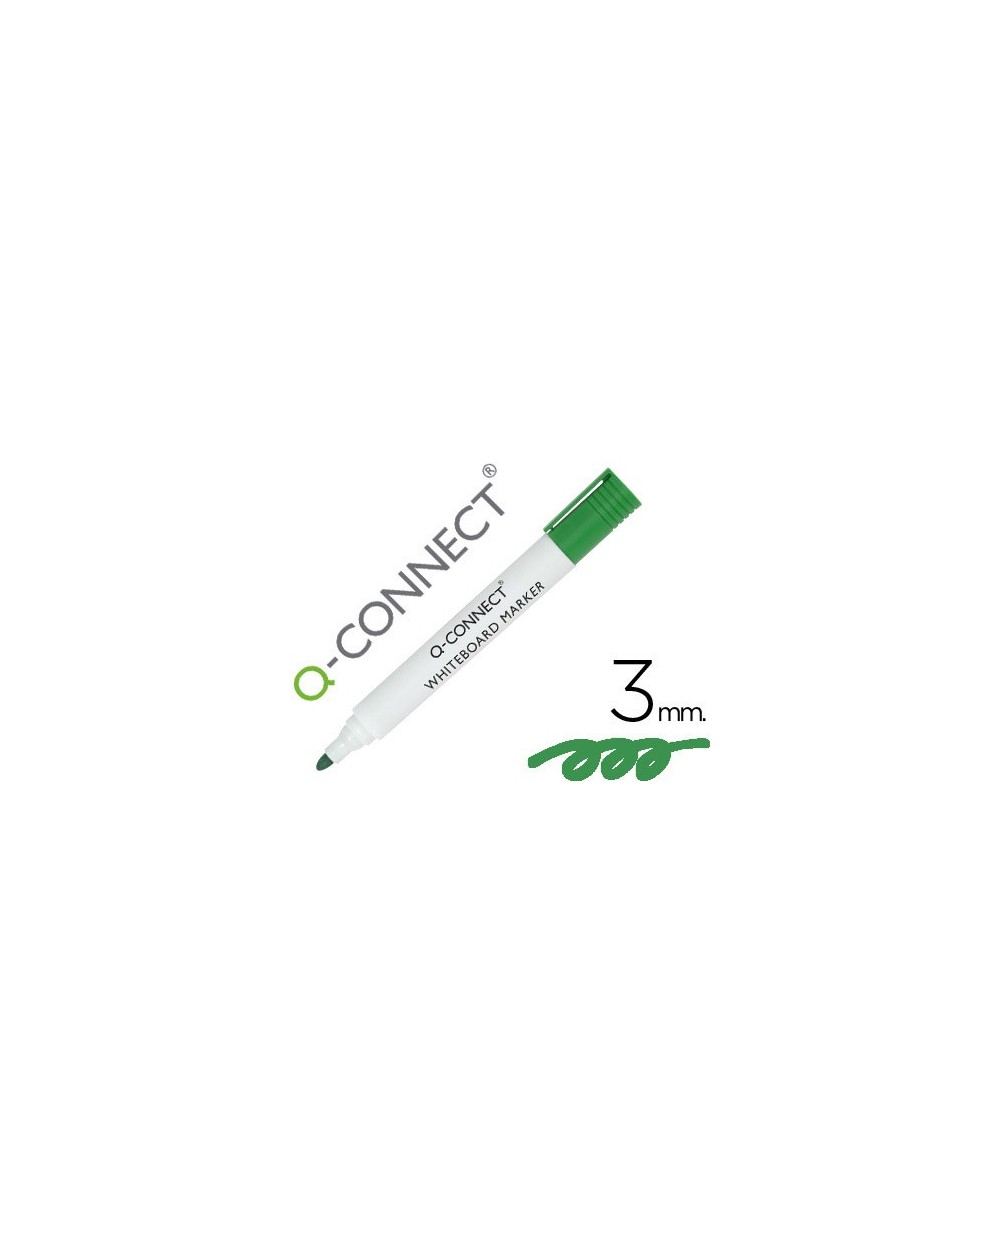 Rotulador q connect pizarra blanca color verde punta redonda 30 mm